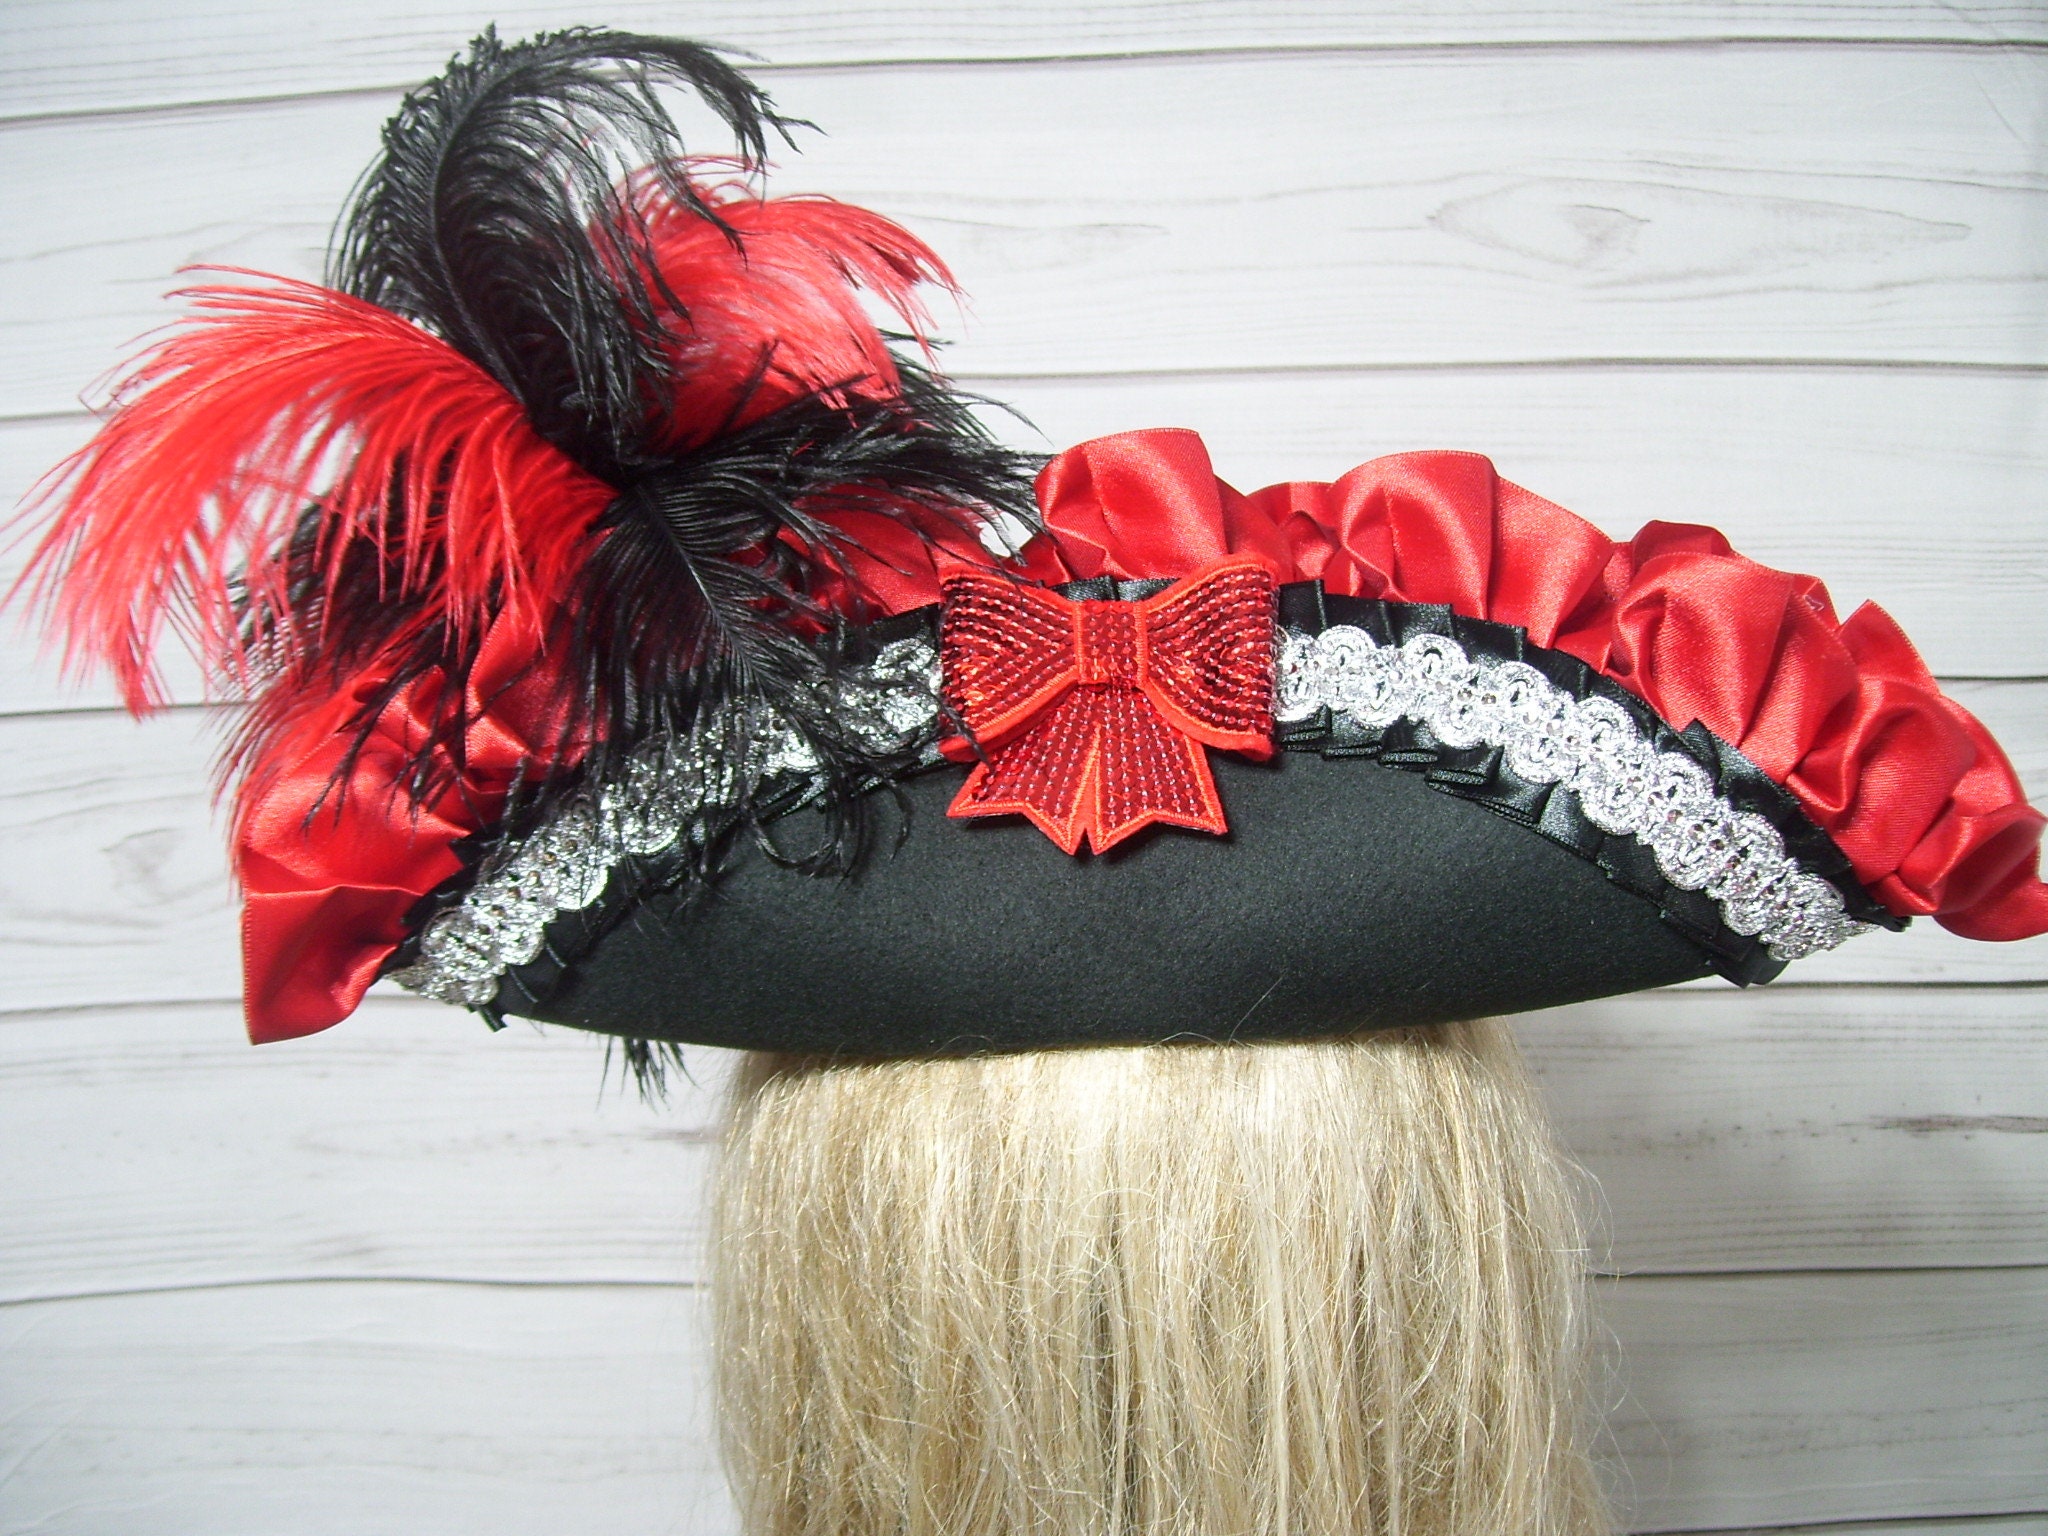 Spooktacular Creations Sombrero pirata negro, sombrero de tricornio  colonial con ribete dorado para adultos, accesorio de disfraz de Halloween,  juego